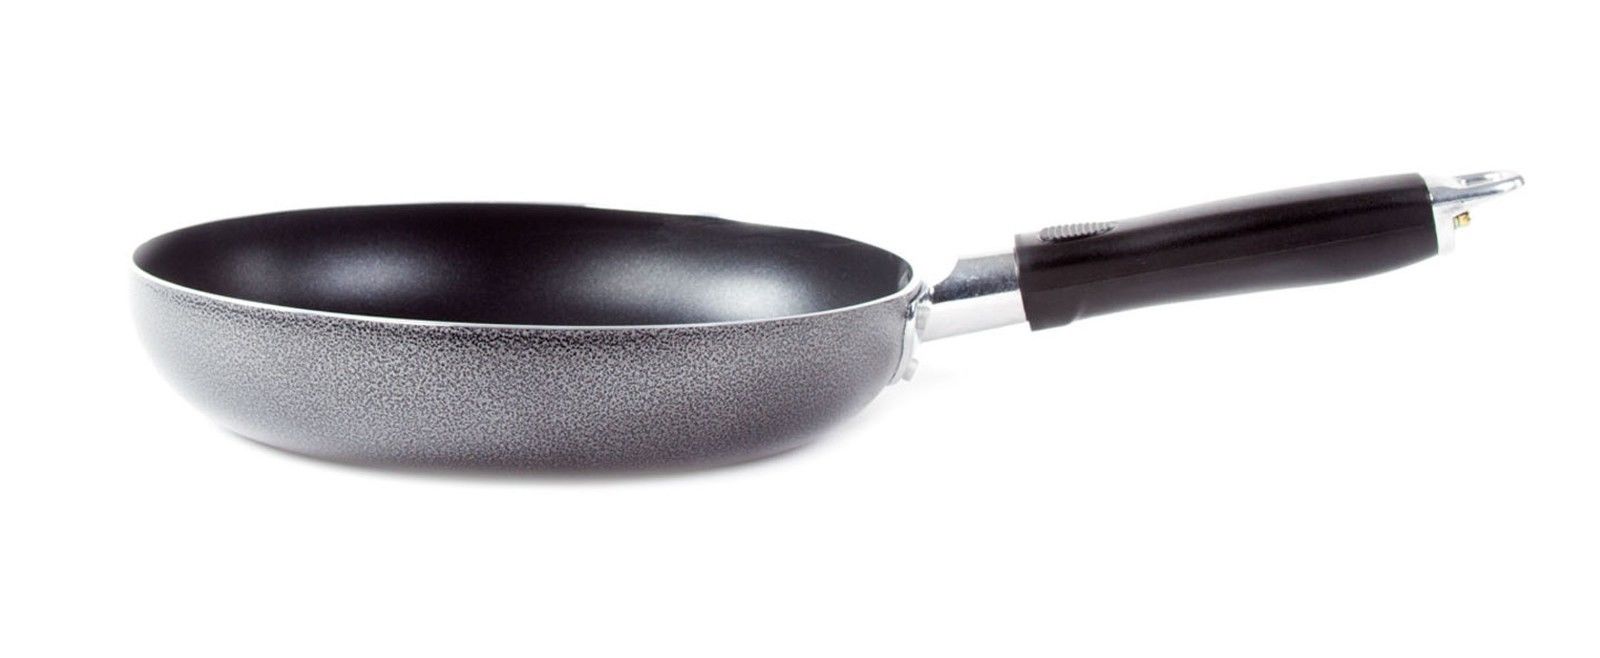 Imperial Home Nonstick Cookware Sets - 10 Pc Black Pots and Pans Set PTFE and PFOA Safe Pots Pans Set